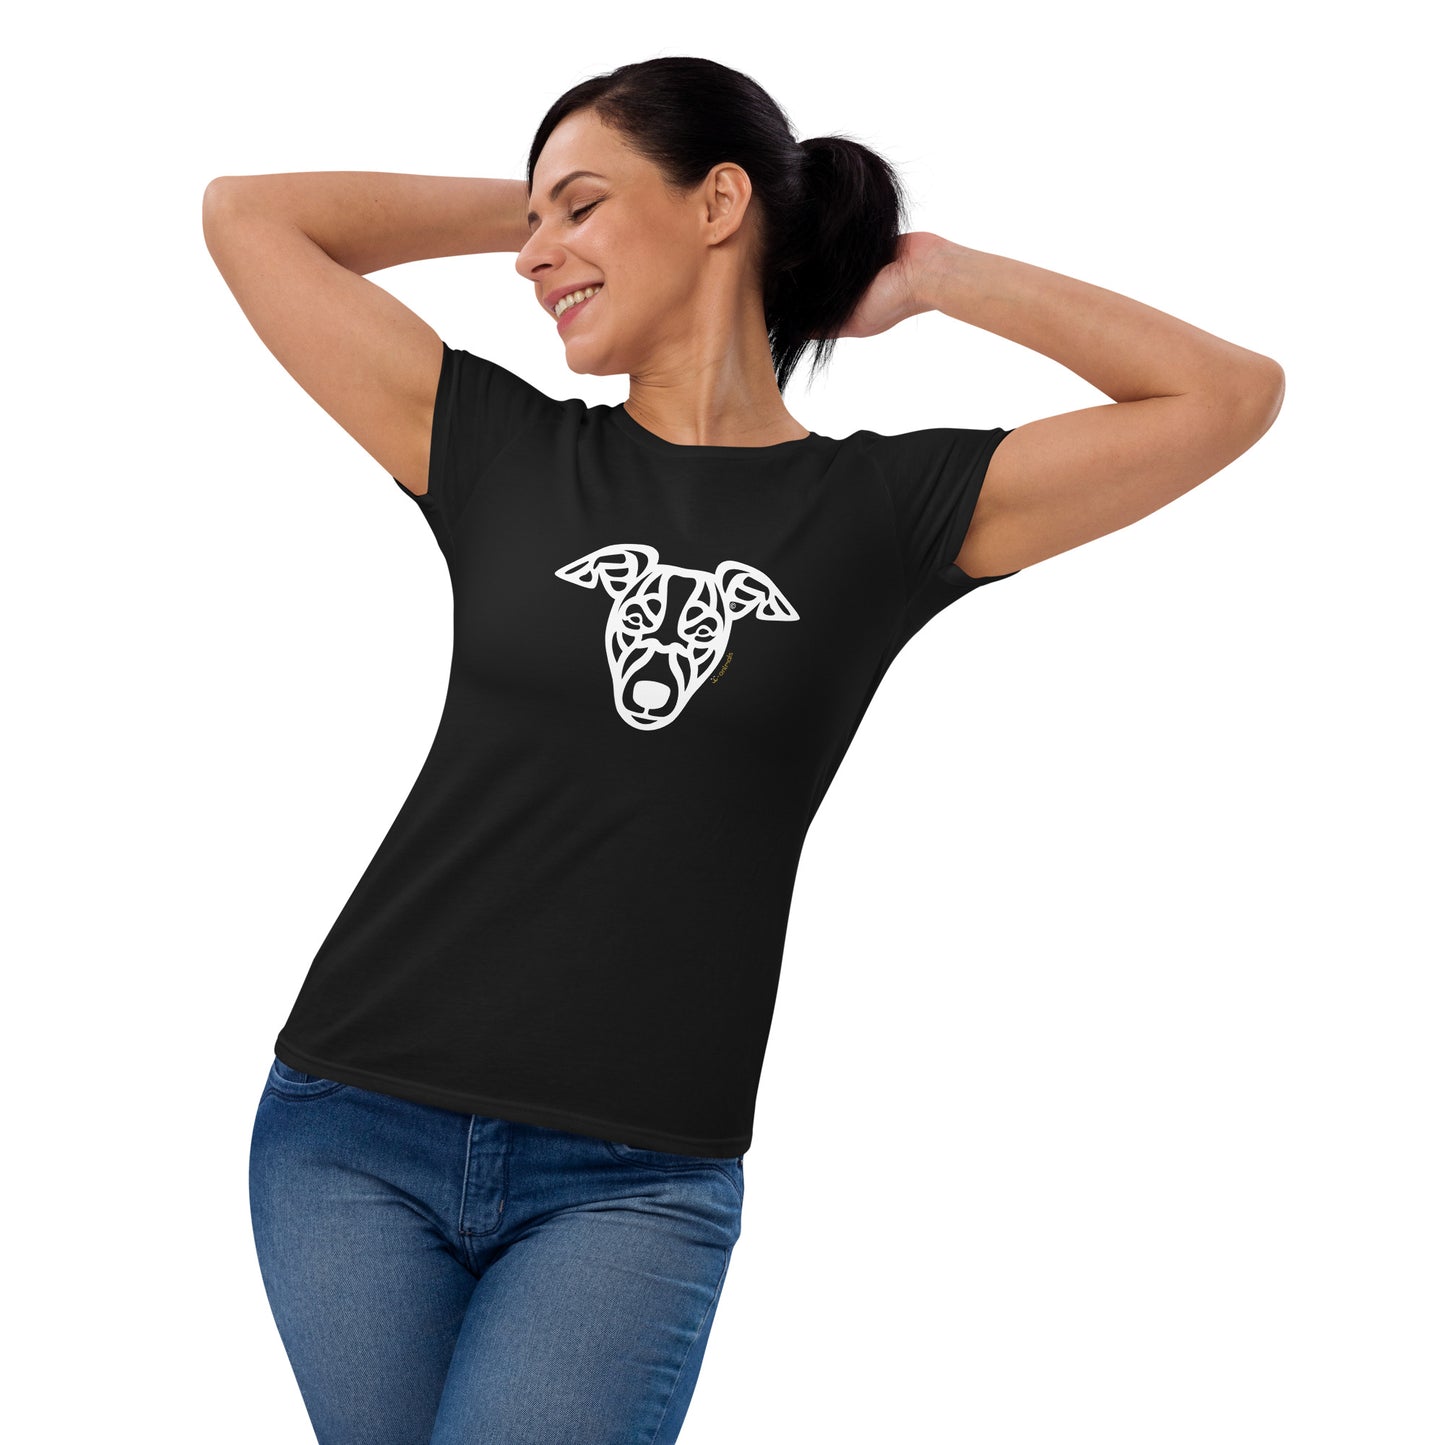 Women's Fashion Fit T-Shirt - Whippet - Tribal